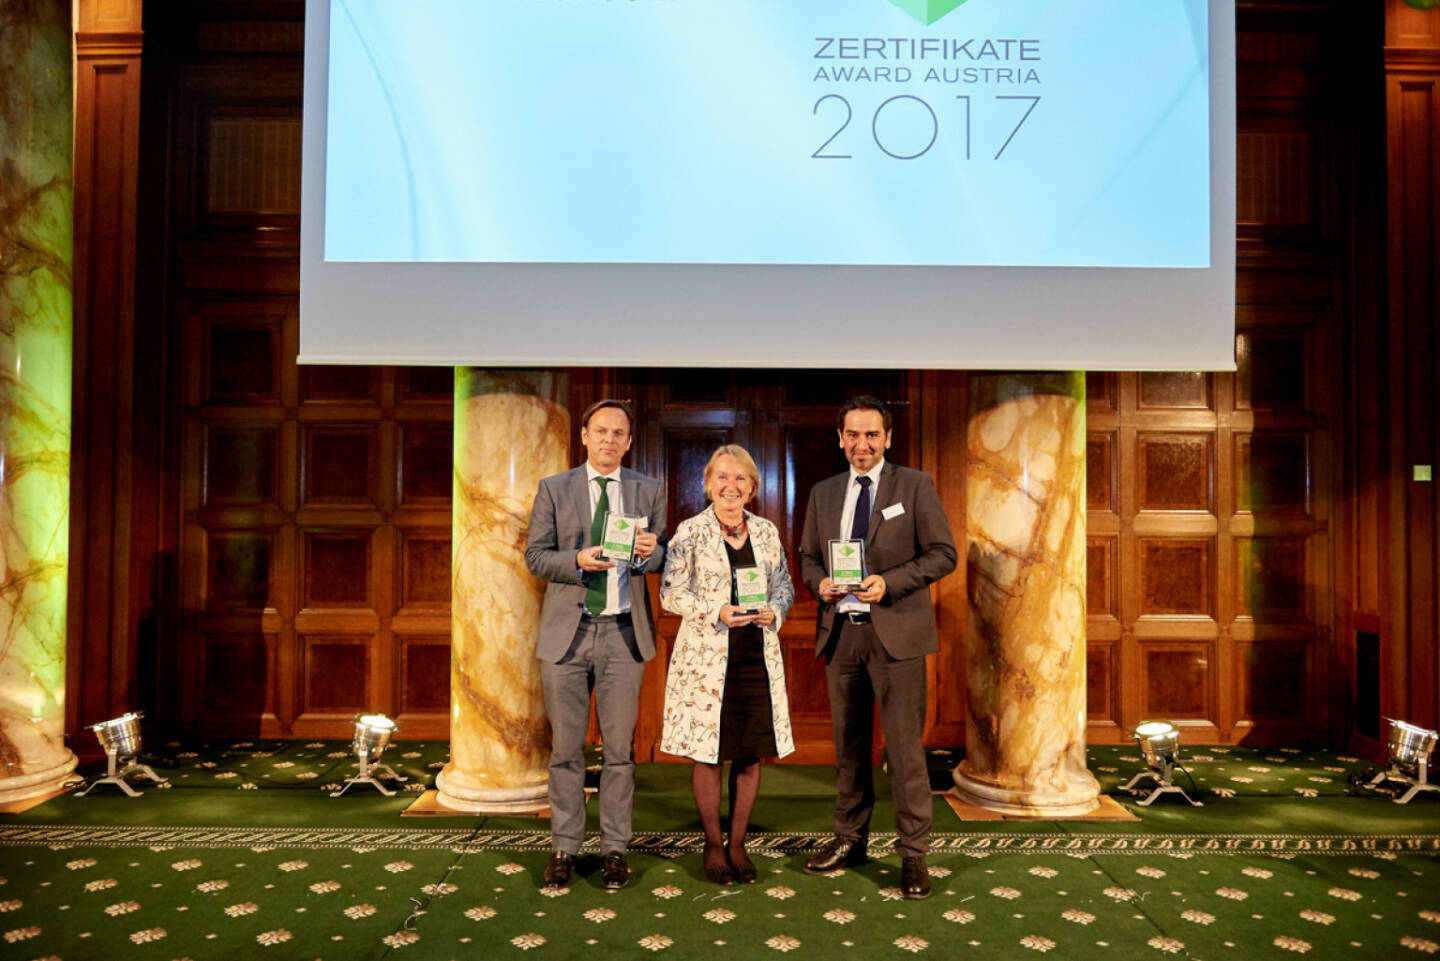 Gesamtsiegerbild - Volker Meinel (BNP Paribas), Heike Arbter (RCB), Uwe Kolar (Erste Group) - Zertifikate Award Austria 2017 (Fotocredit: Zertifikate Forum Austria)